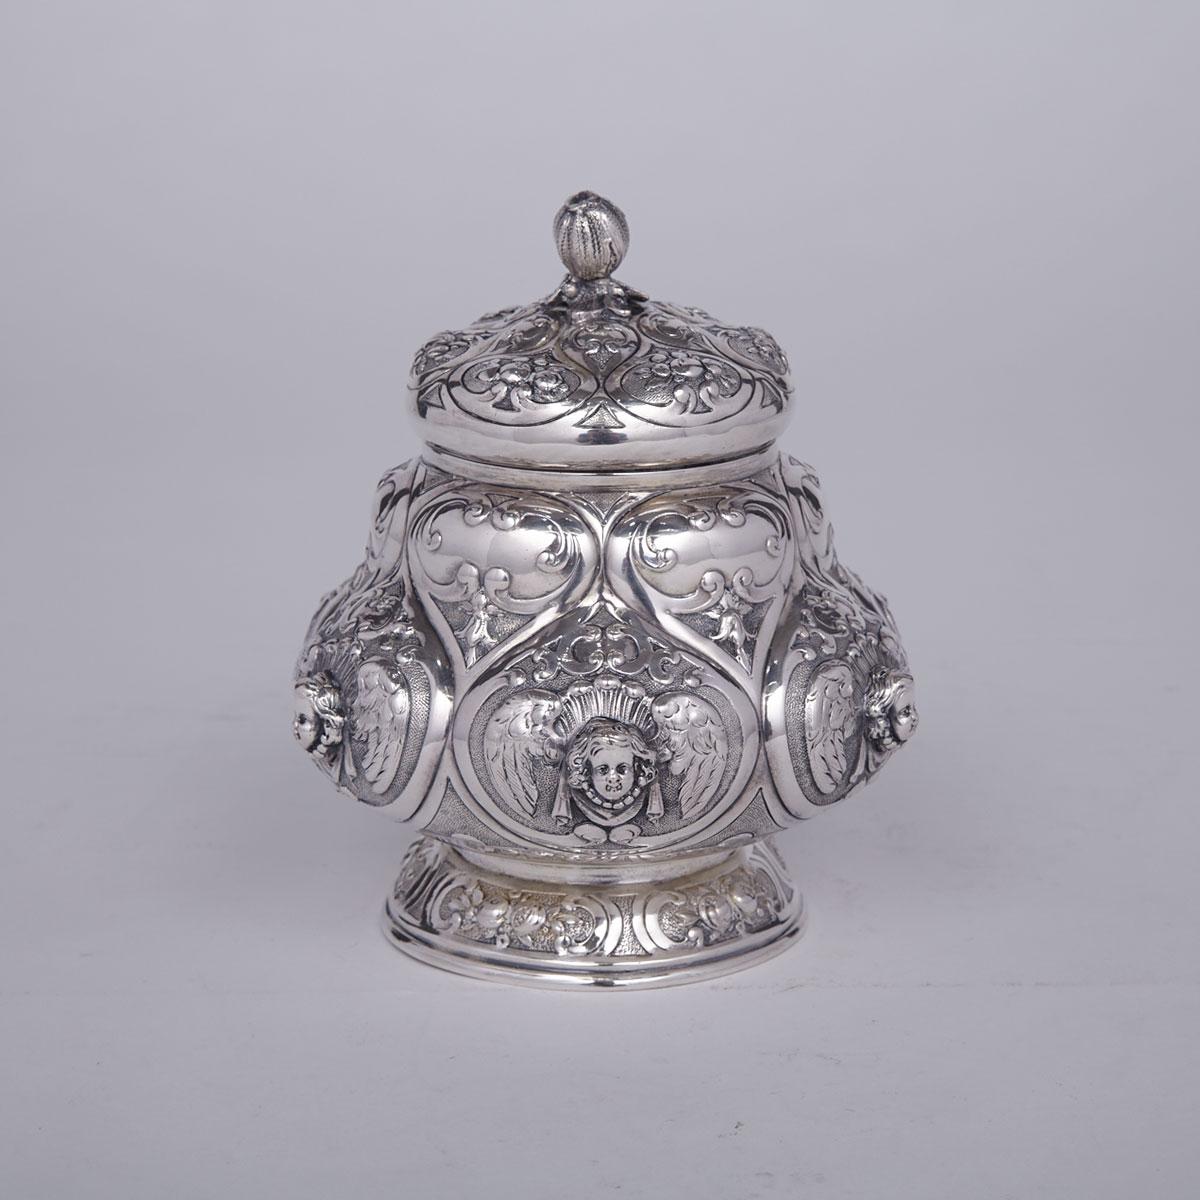 German Silver Sugar Vase and Cover, Friedrich Reusswig, Hanau, early 20th century